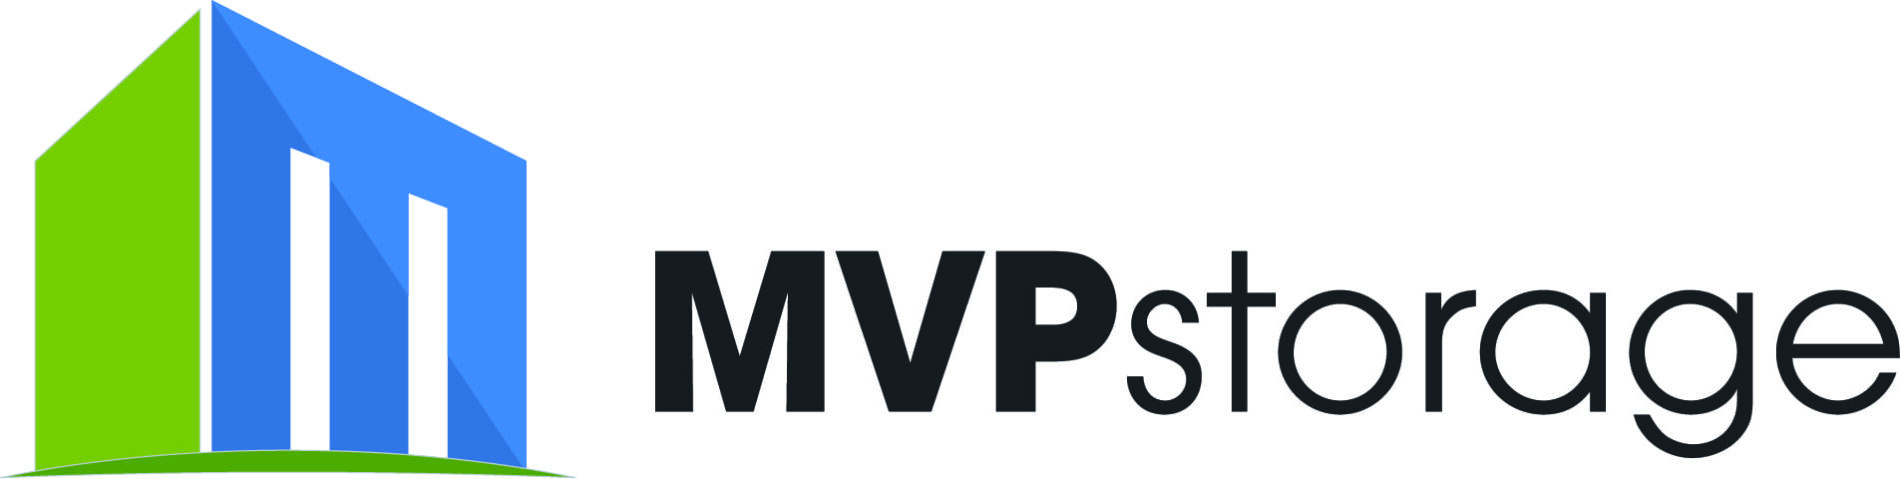 MVP Storage